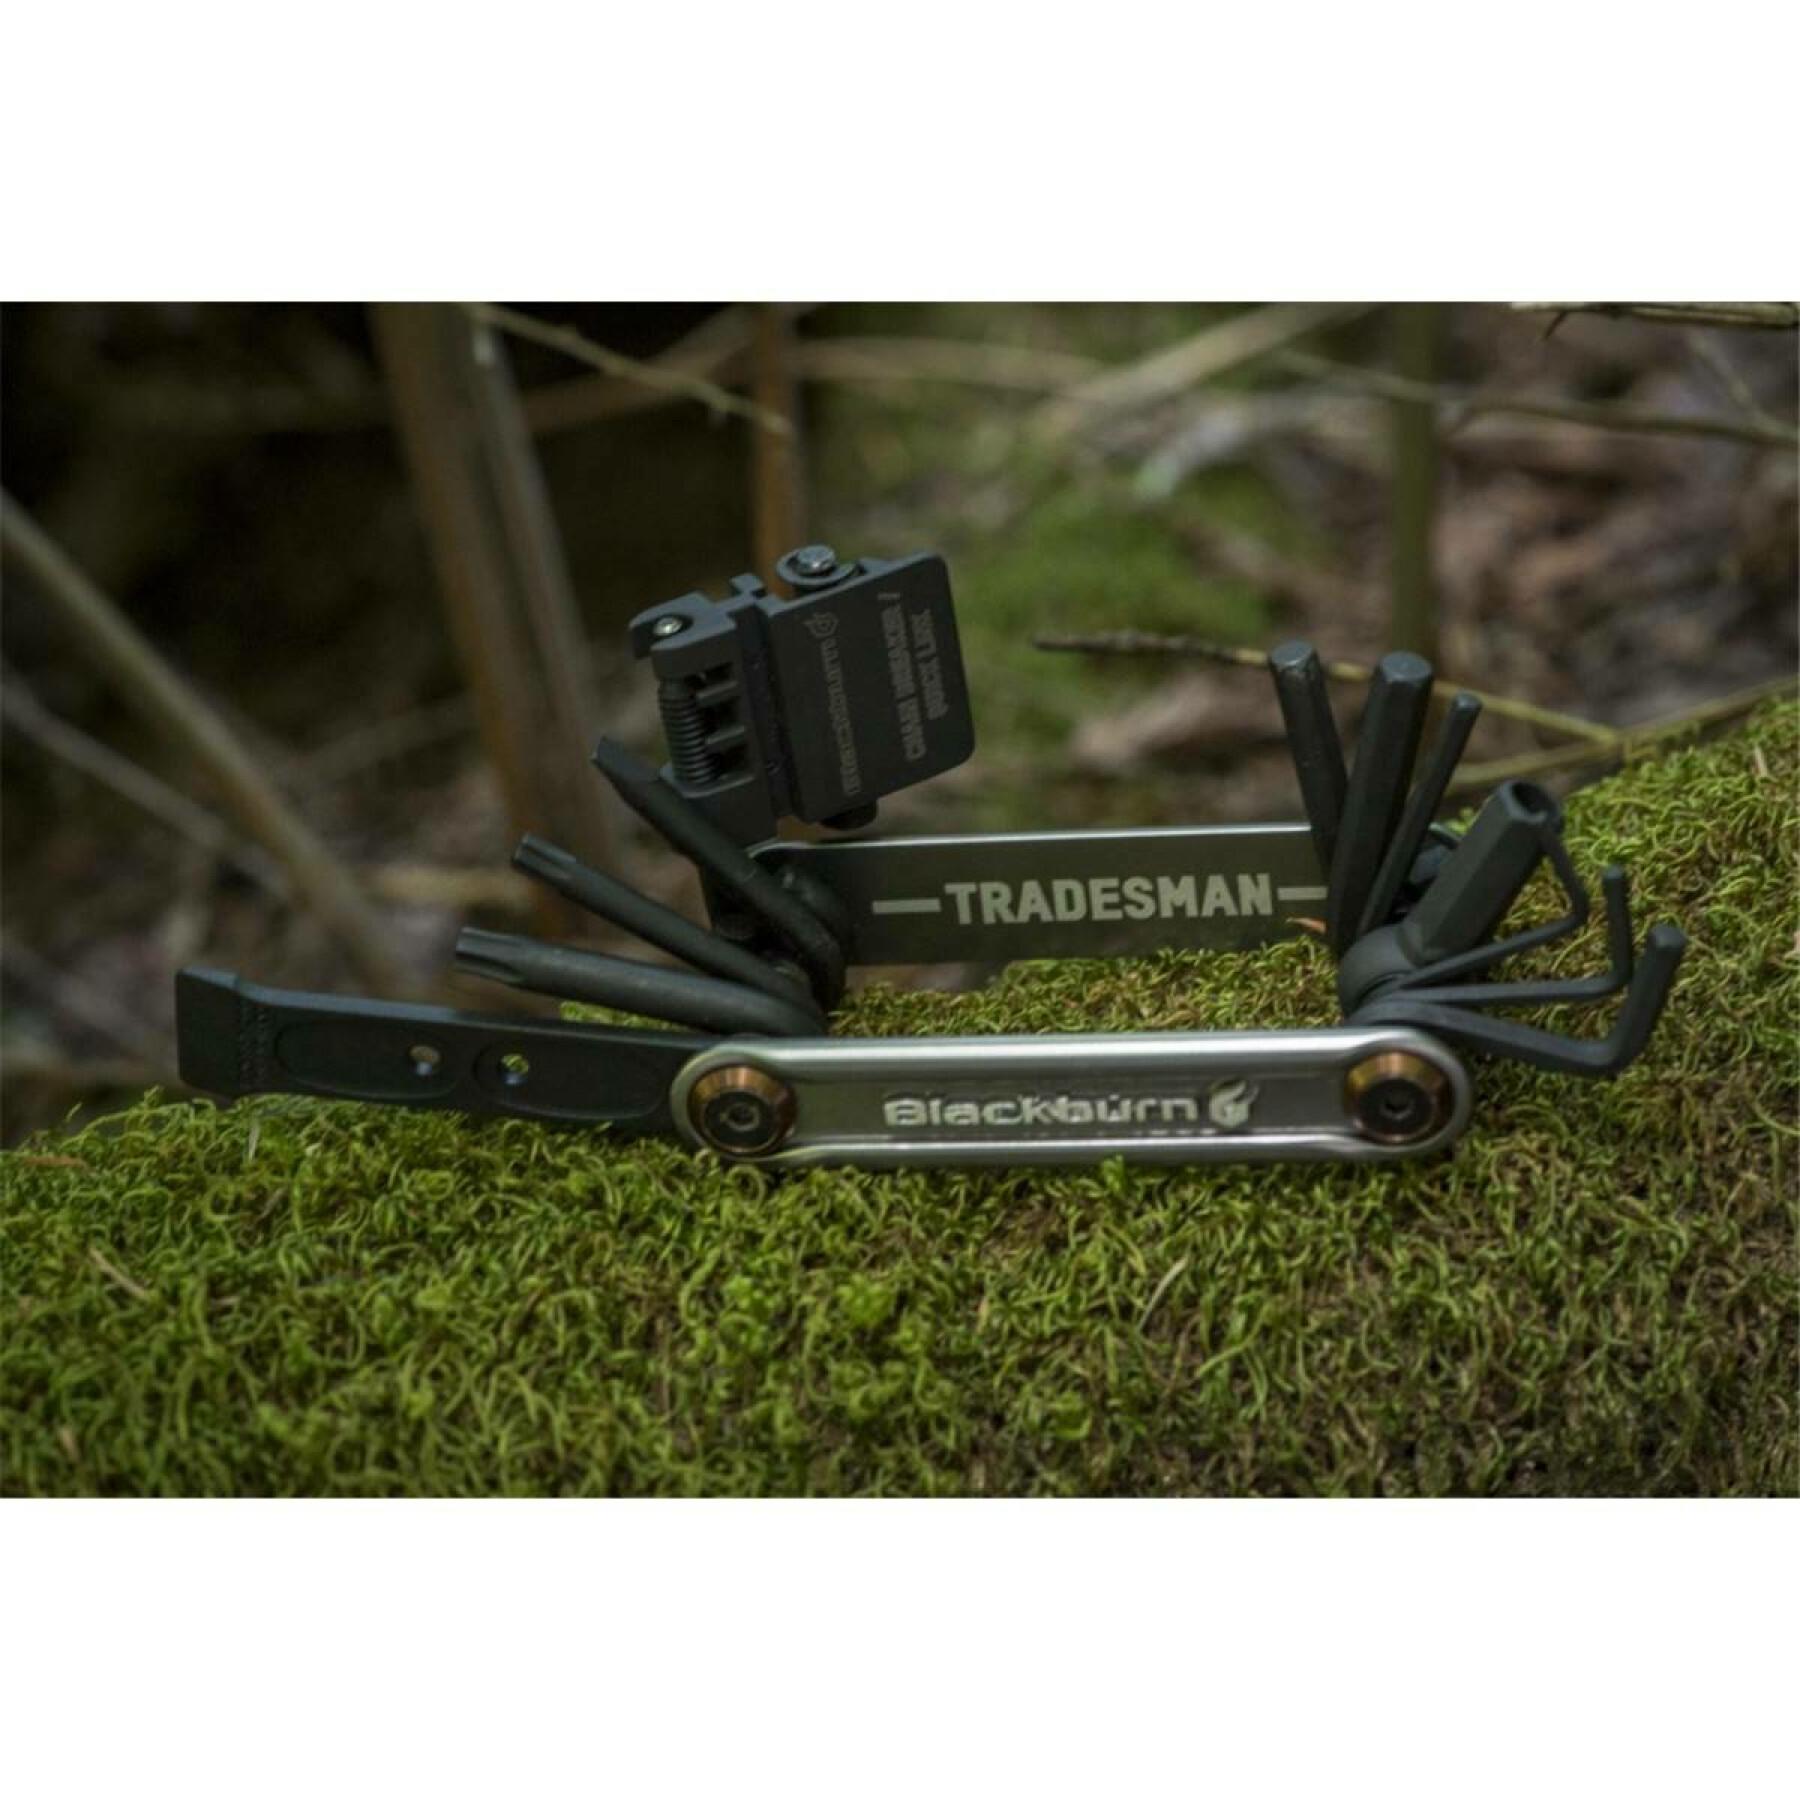 Multi-outils Blackburn Tradesman